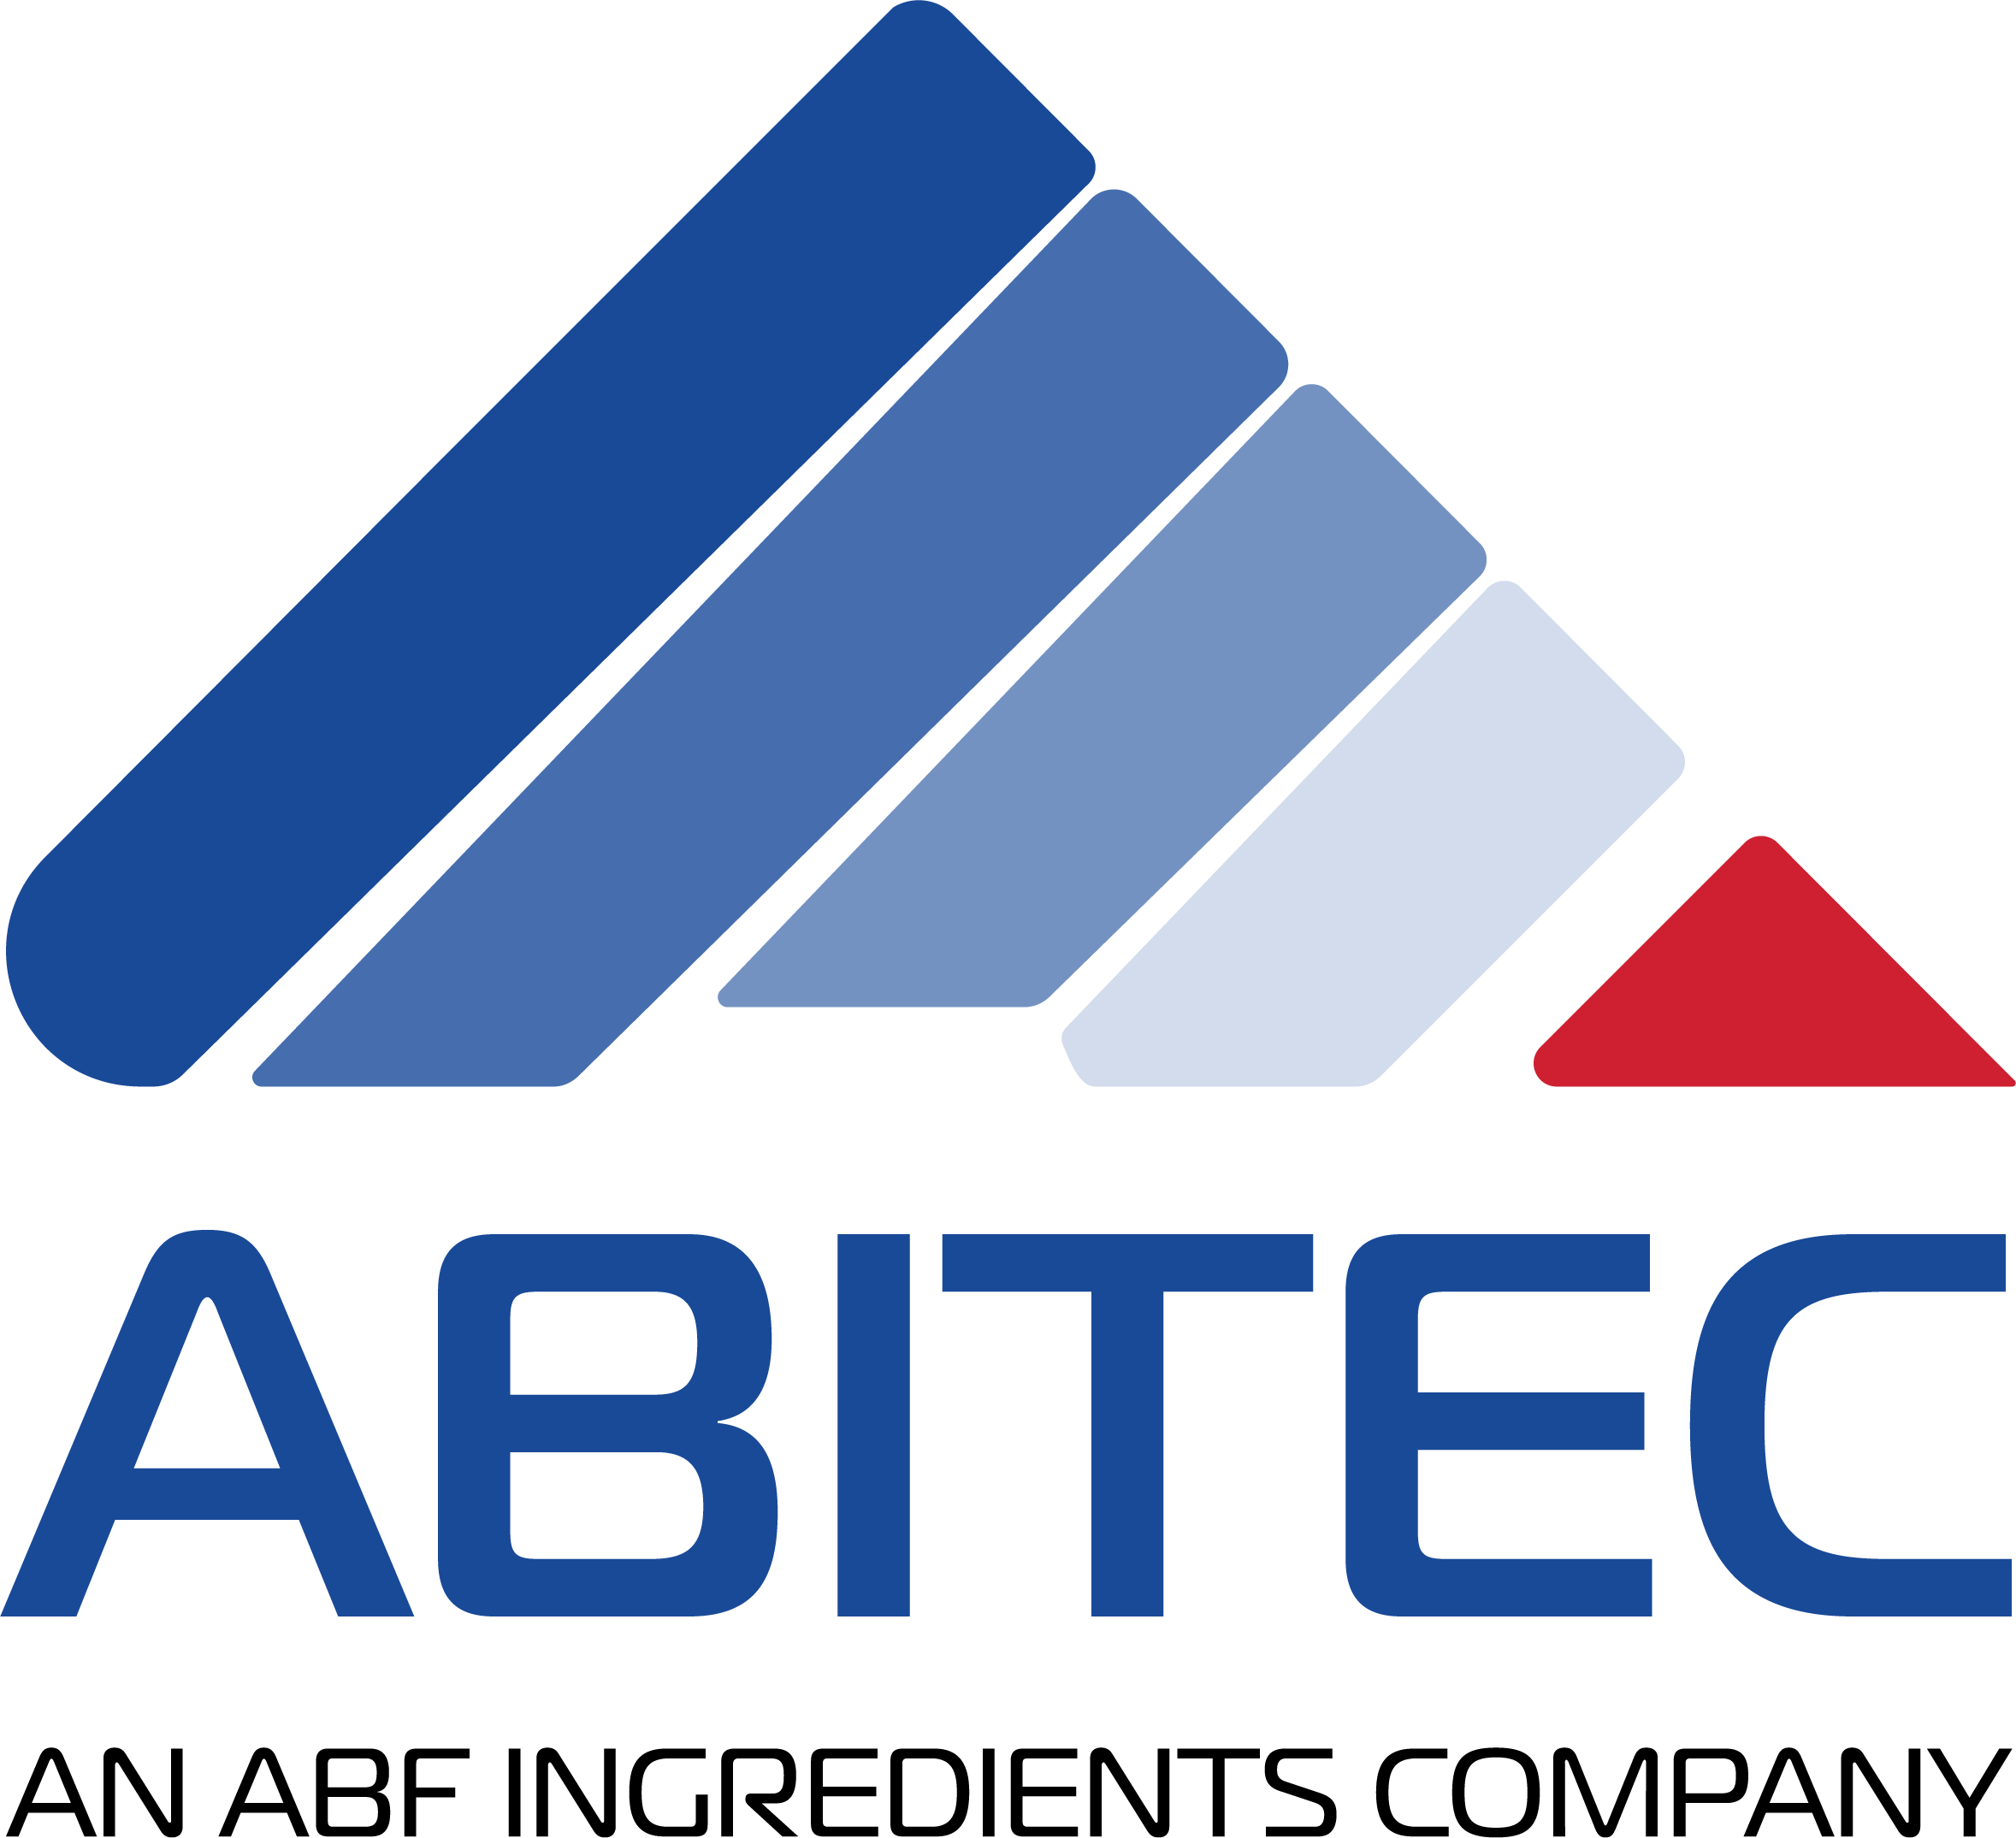 Abitec Corporation